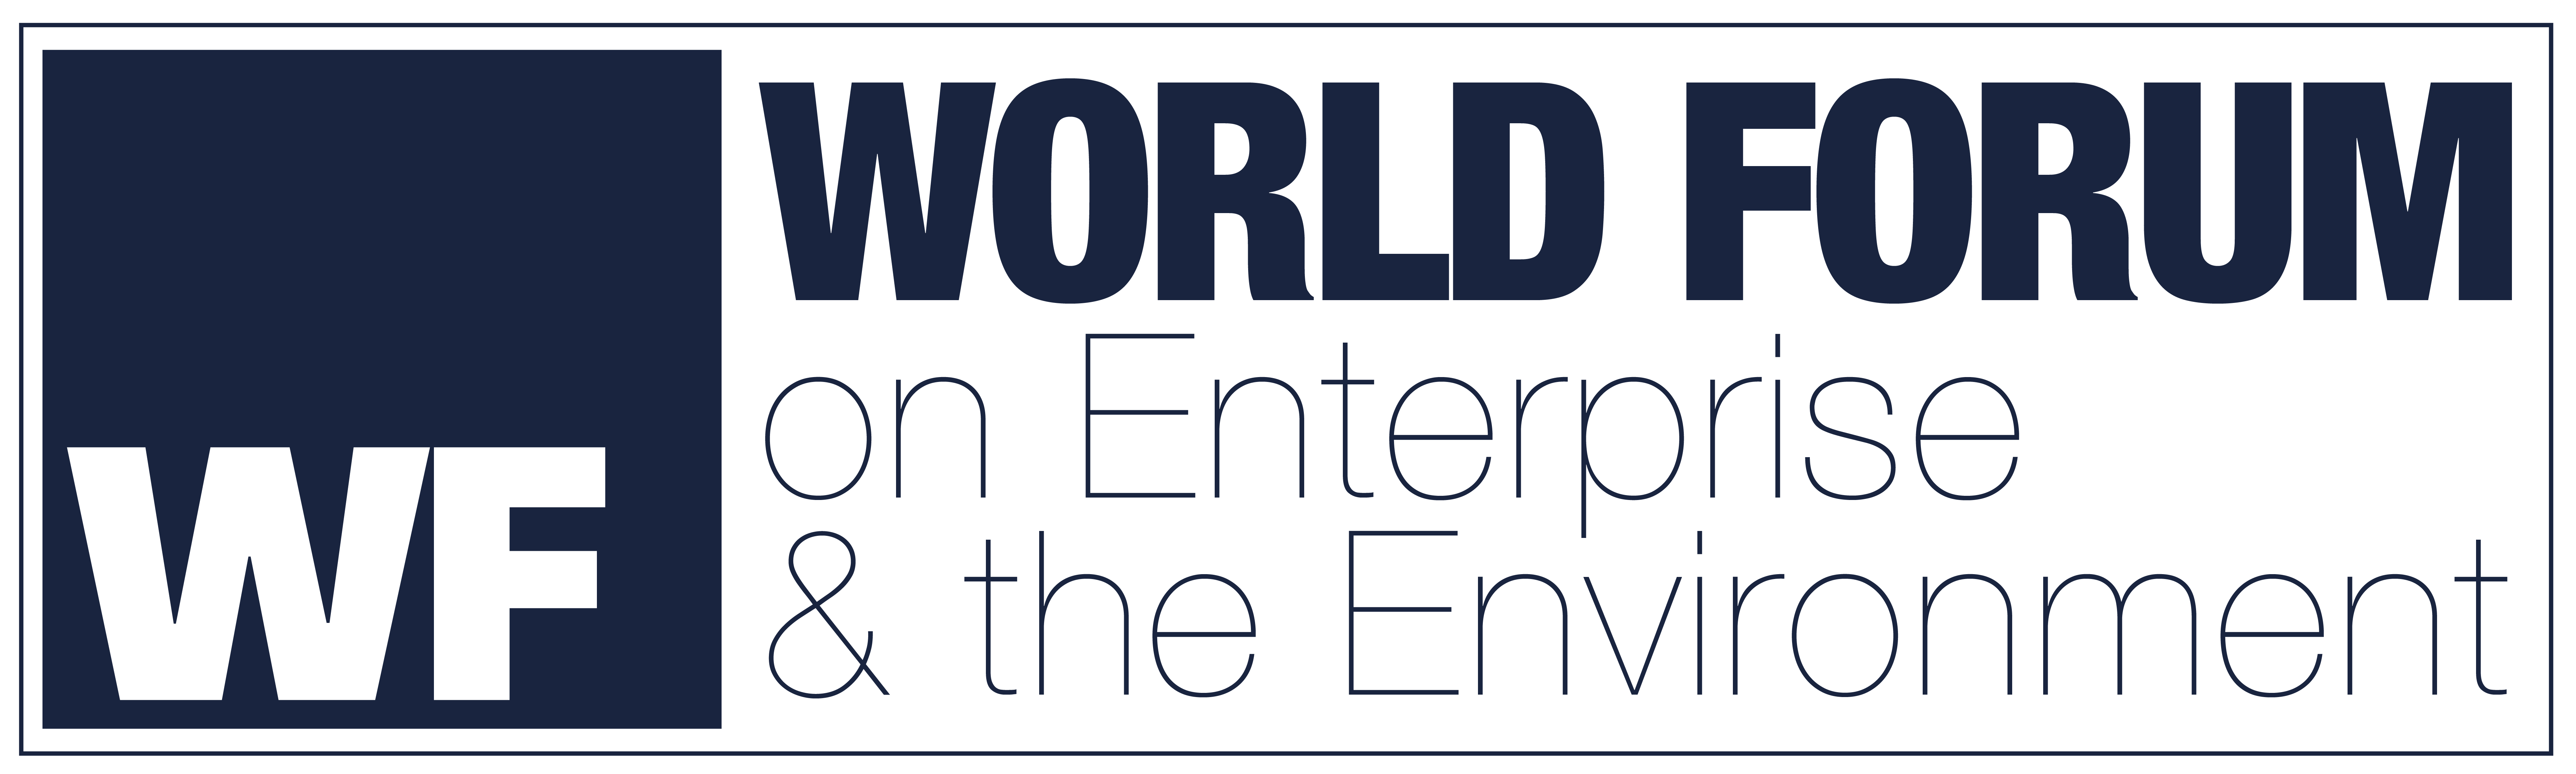 world forum logo